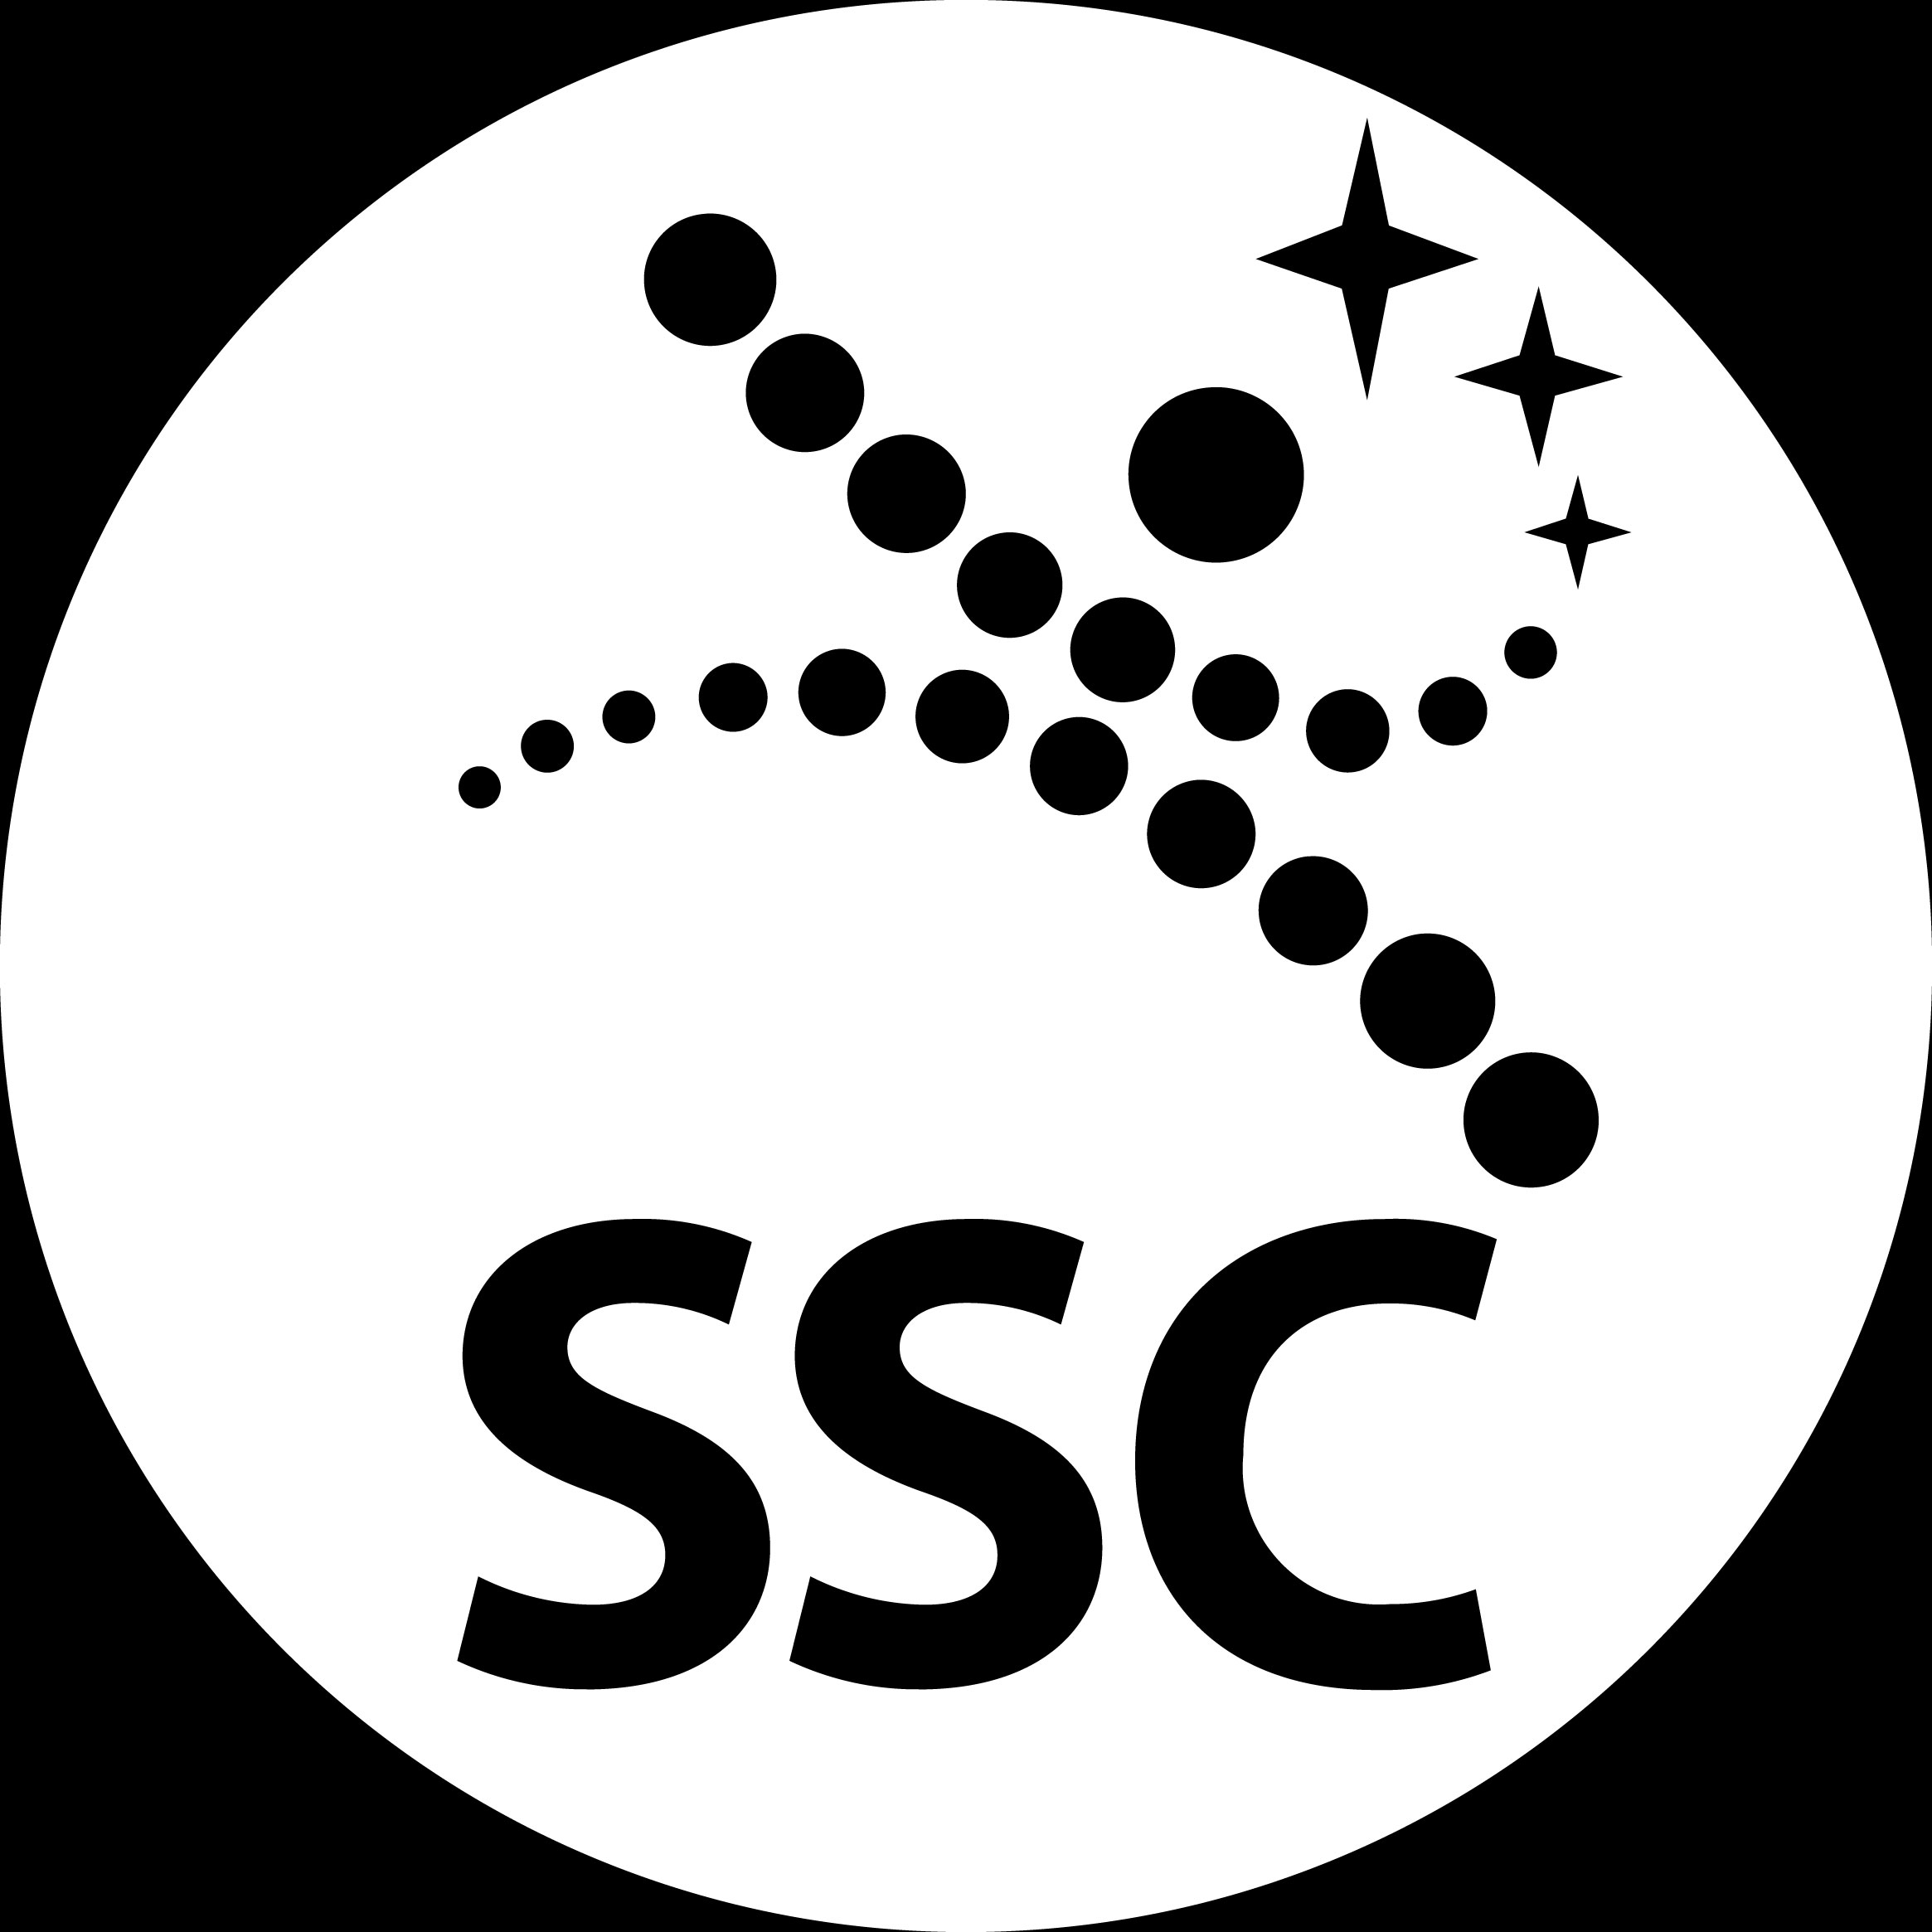 Swedish Space Corporation logo